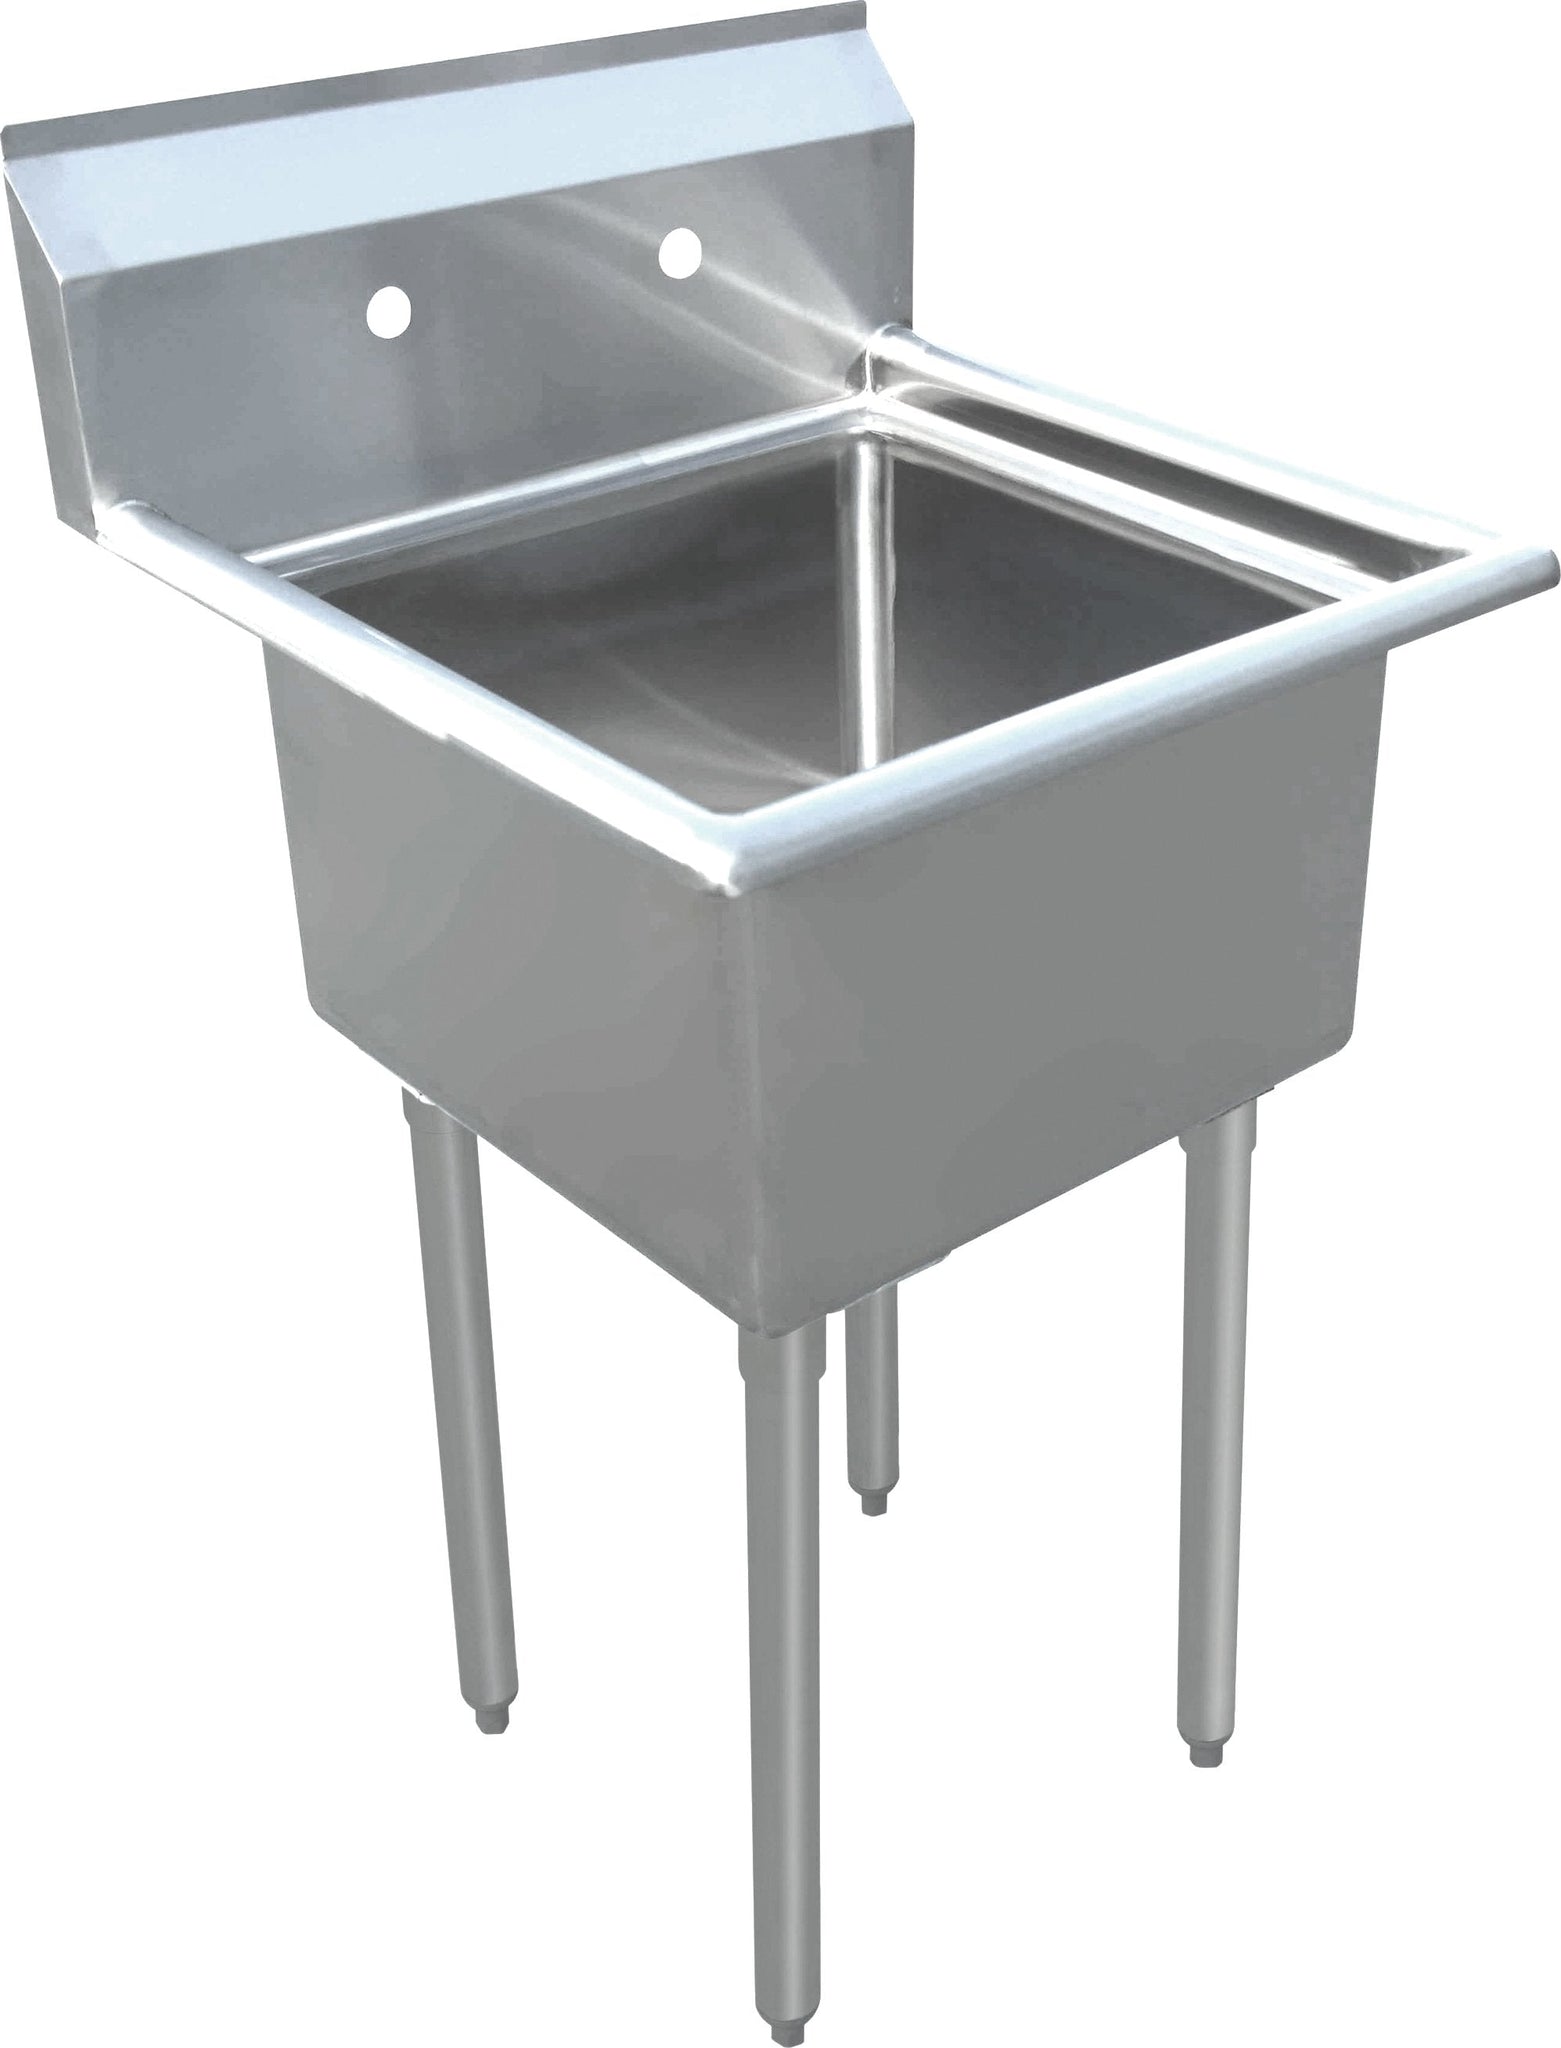 Omcan - No Drain Board 20” x 20” x 12” Pot Sink with Center Drain - 43072